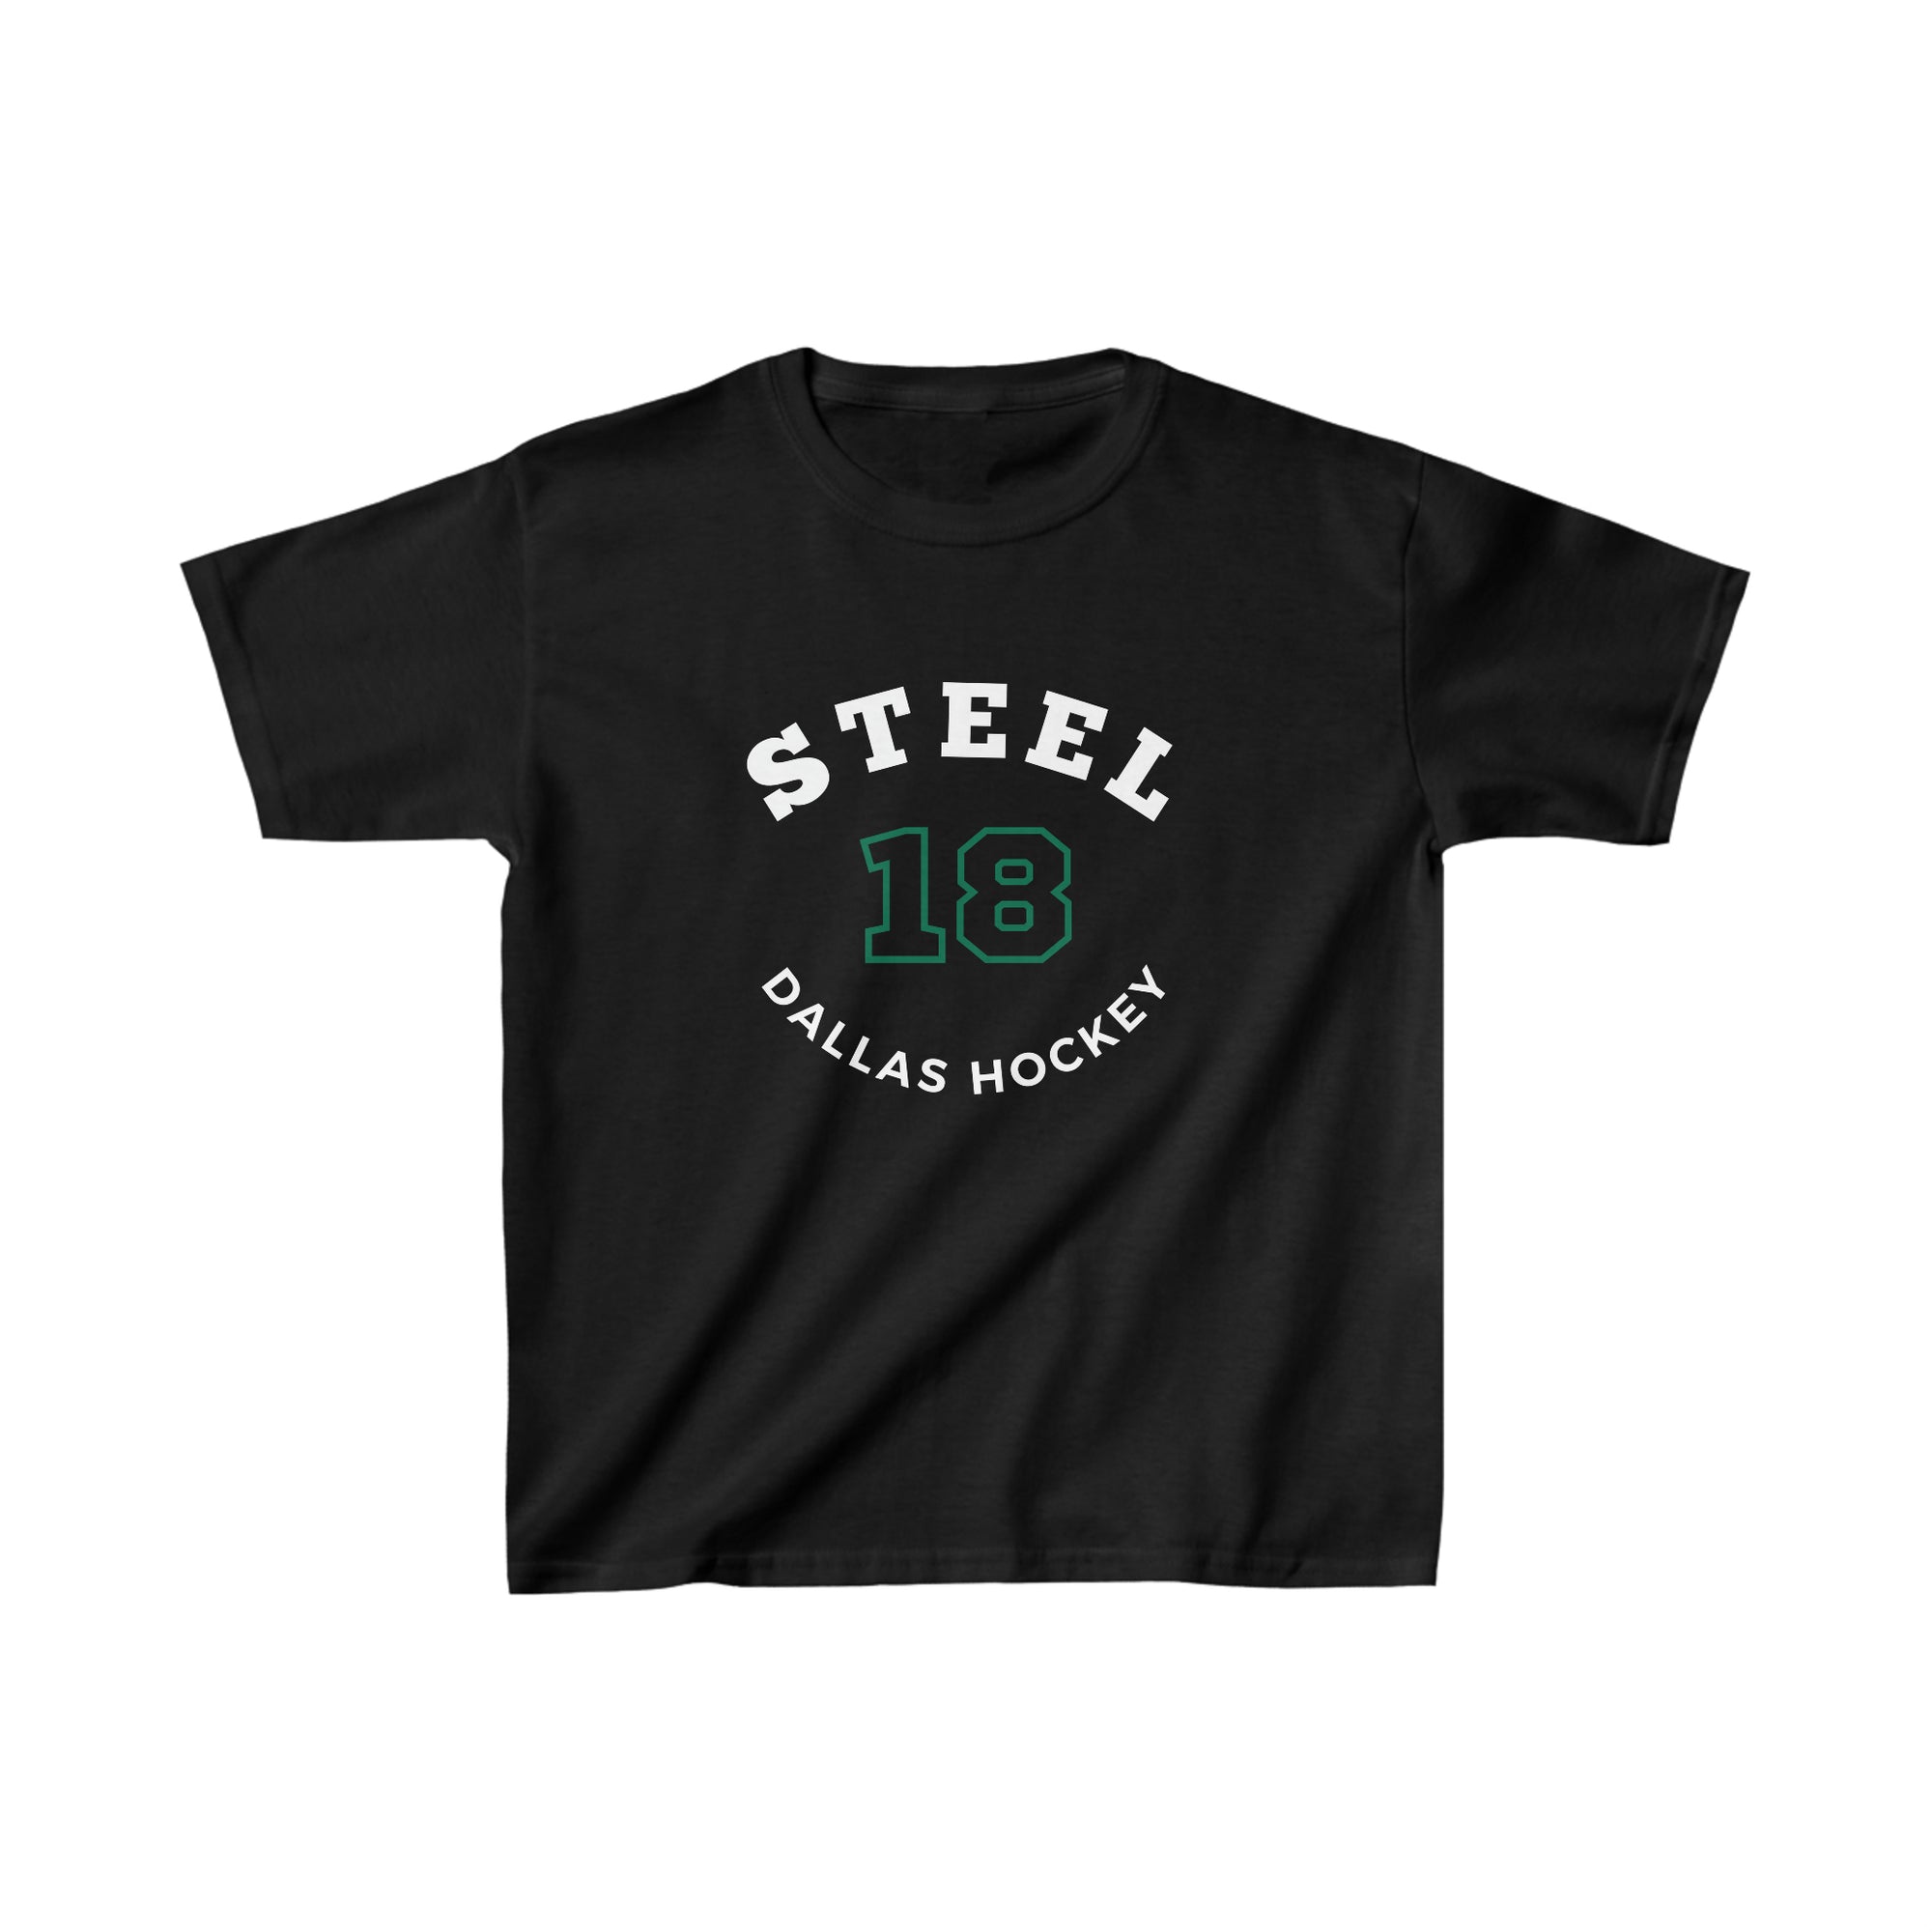 Steel 18 Dallas Hockey Number Arch Design Kids Tee